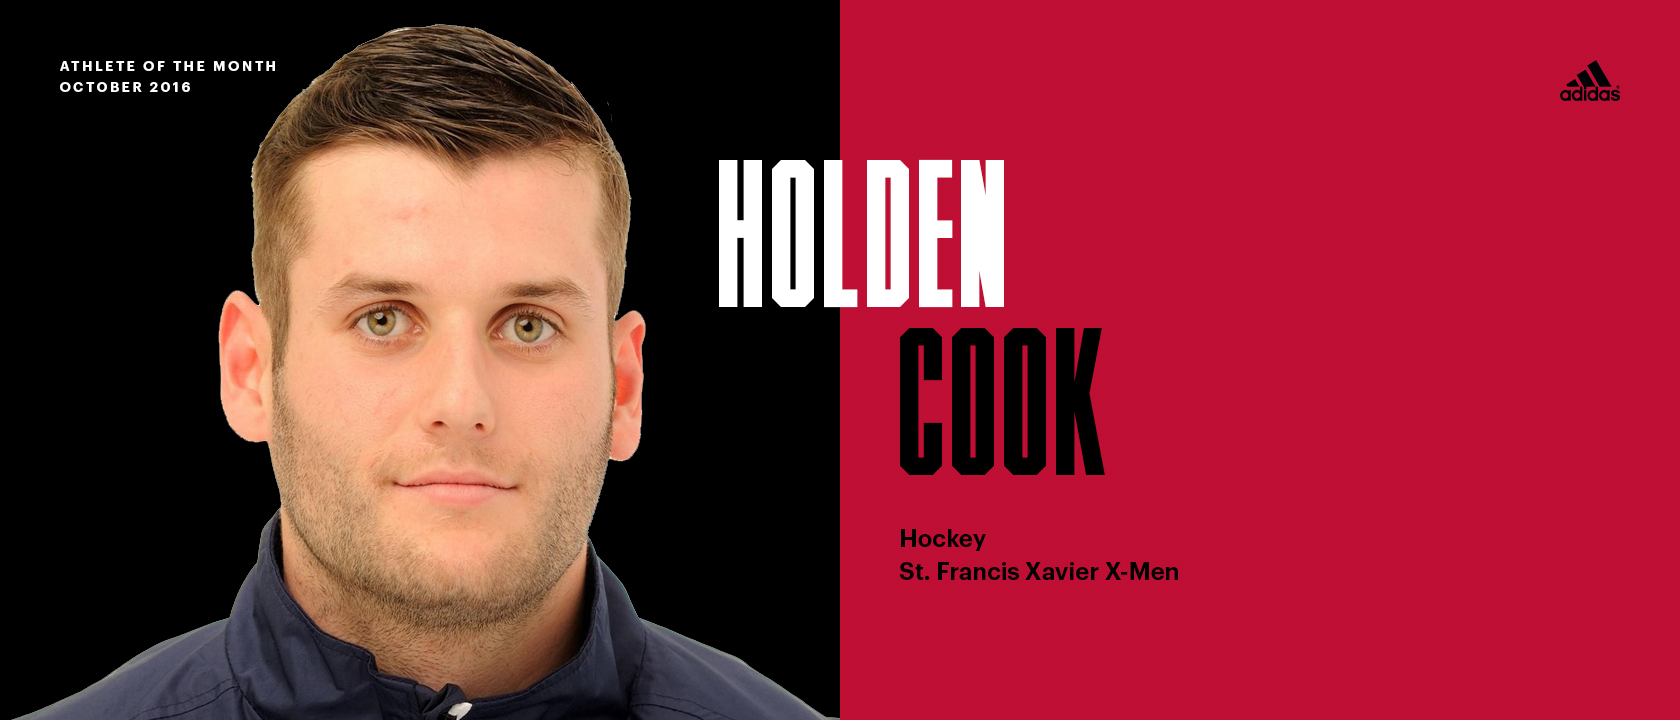 October: Holden Cook